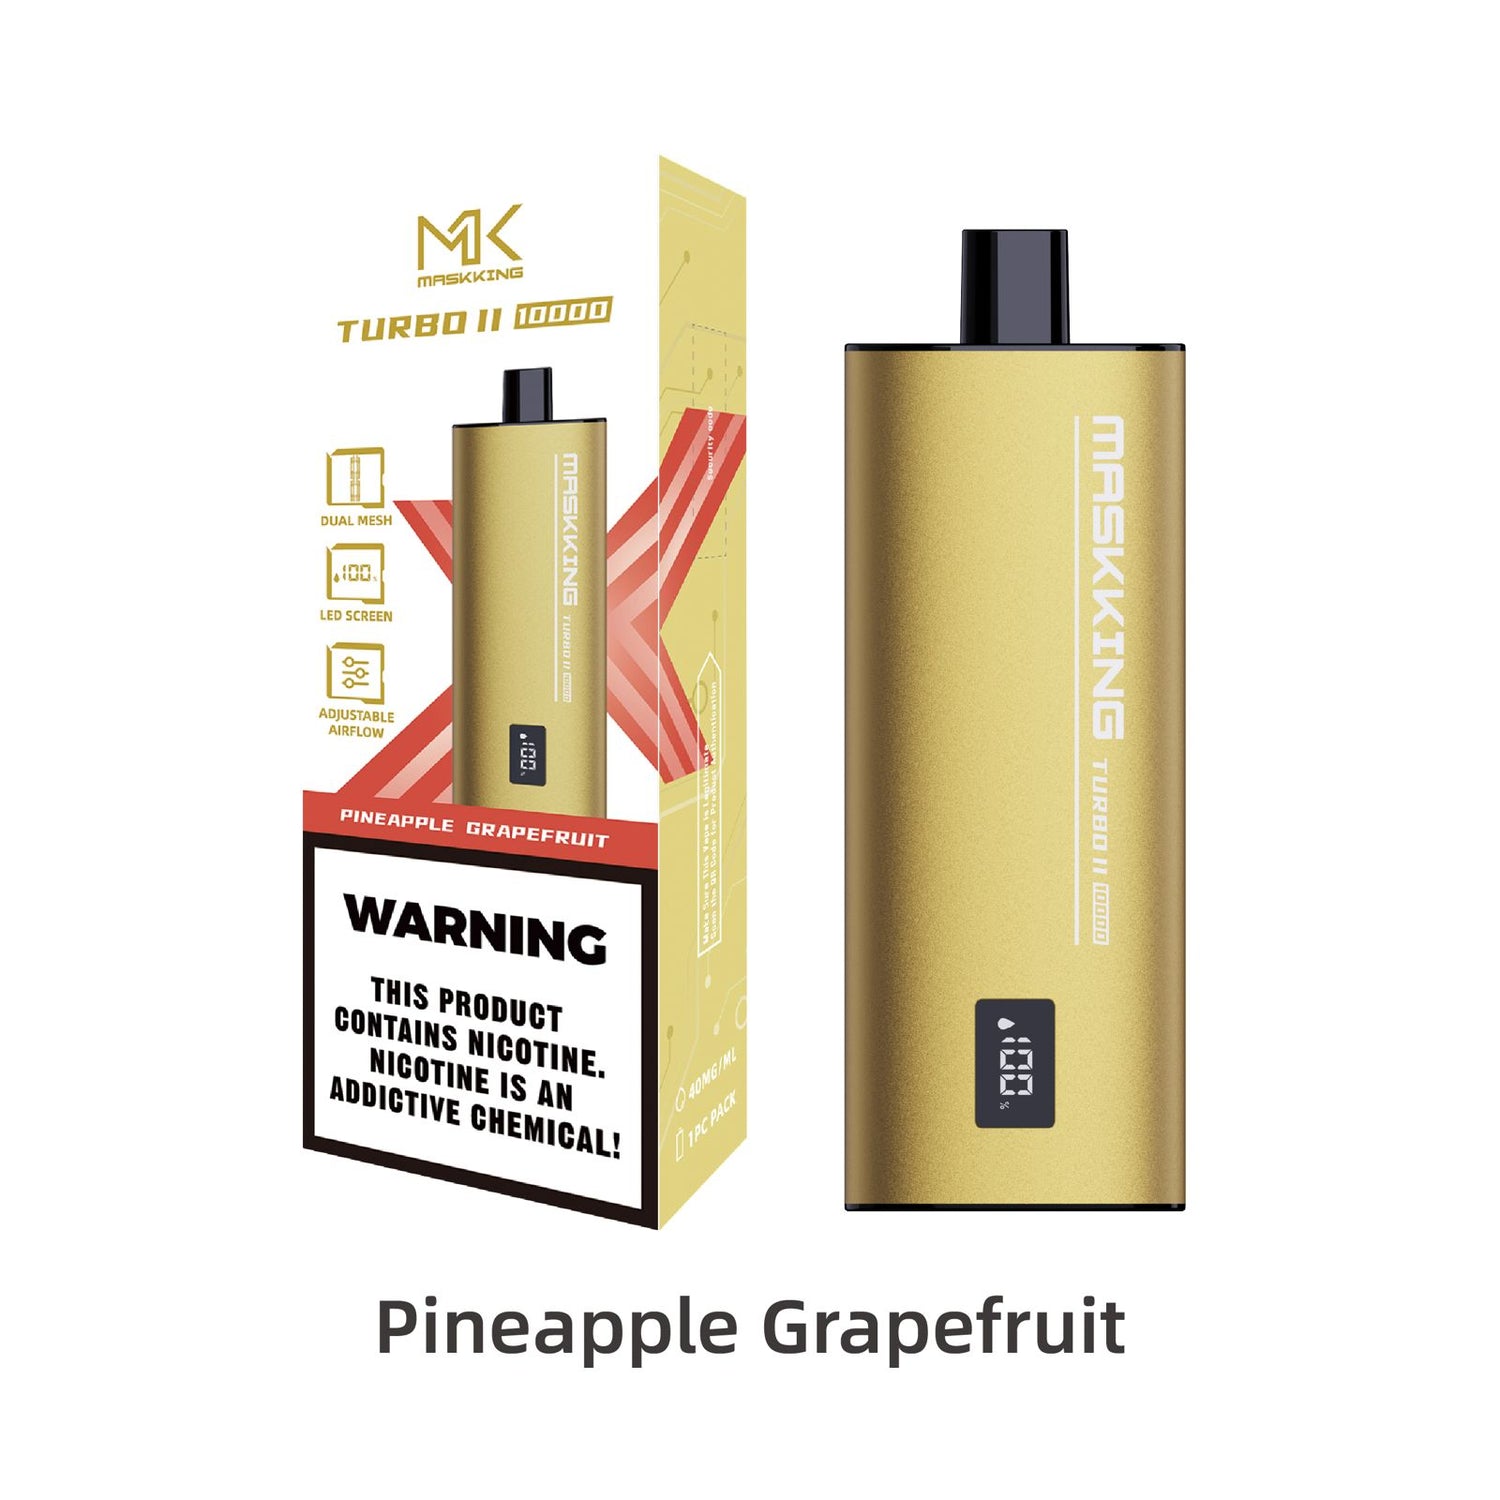 Maskking Turbo Pineapple grapefruit